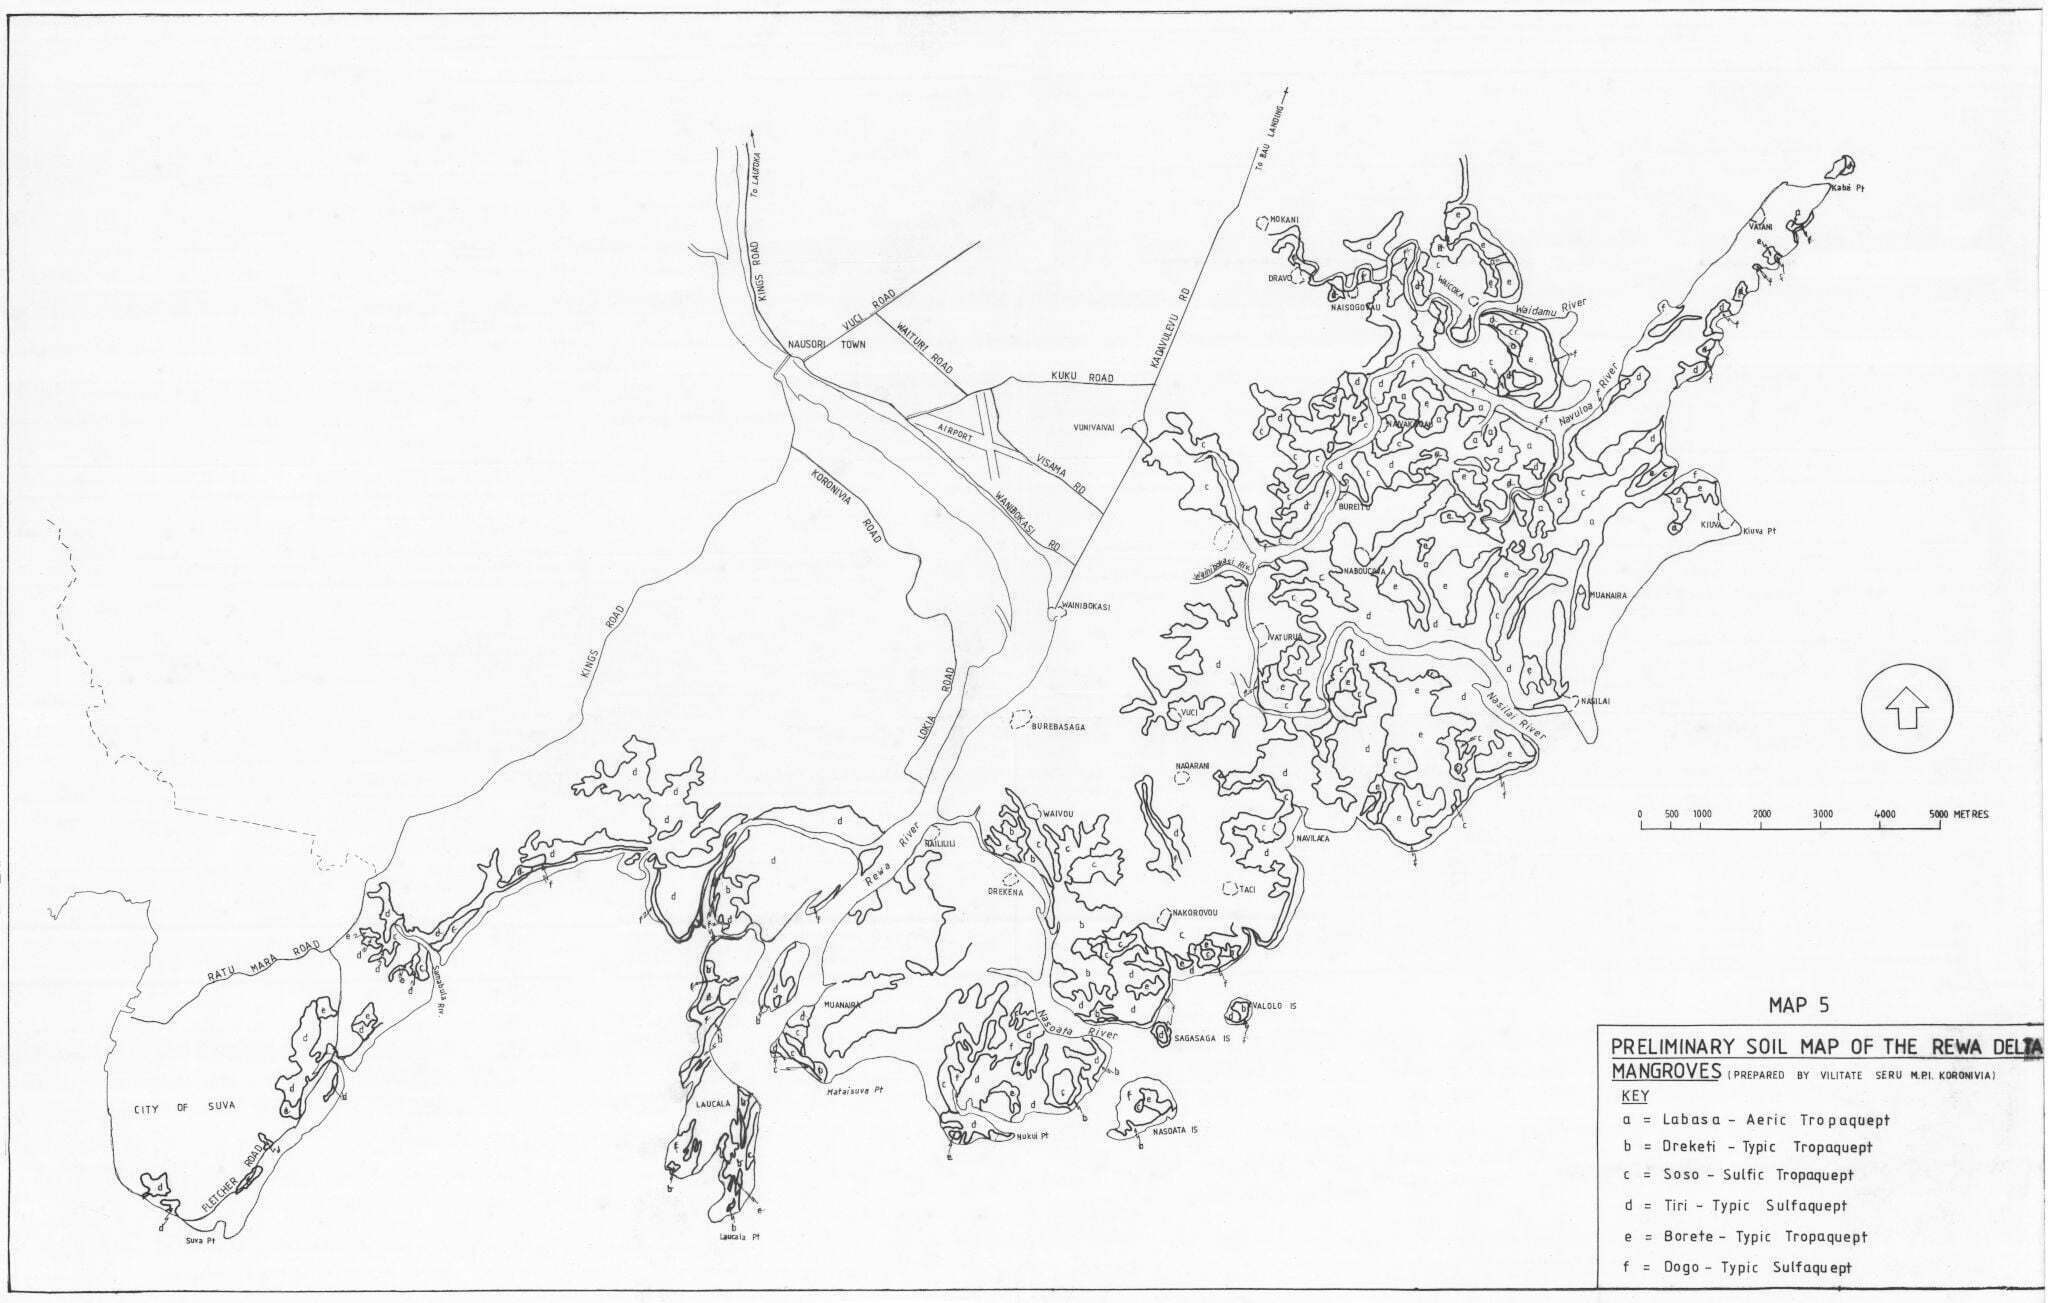 Map-5-Preliminary-soil-map-of-the-rewa-delta-mangroves